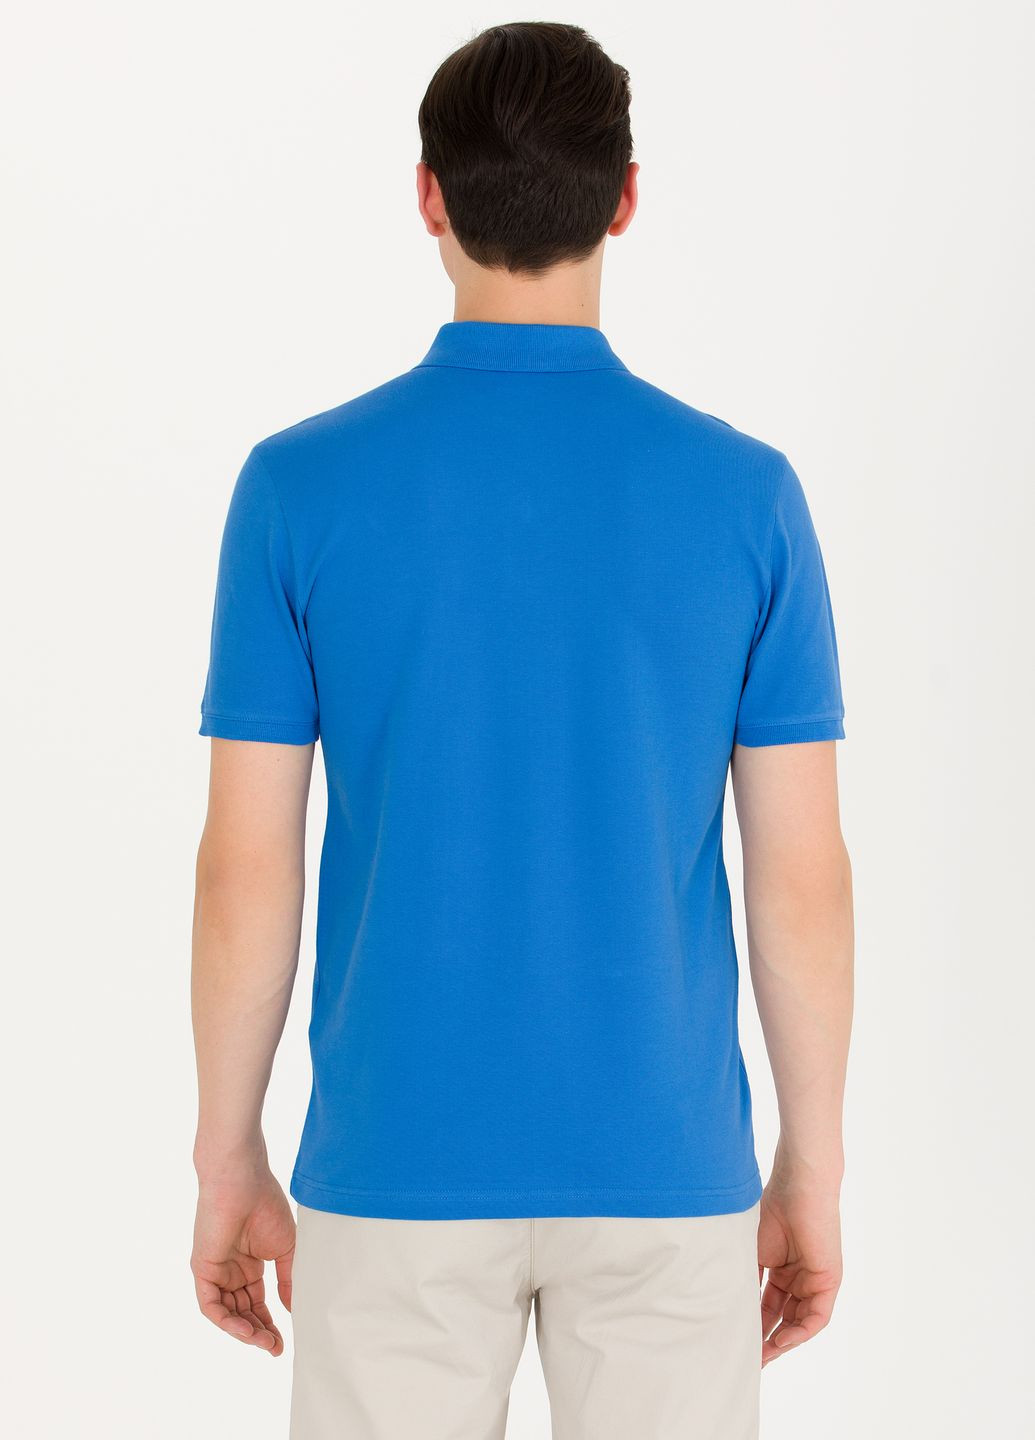 Синяя футболка u.s/ polo assn. мужская U.S. Polo Assn.